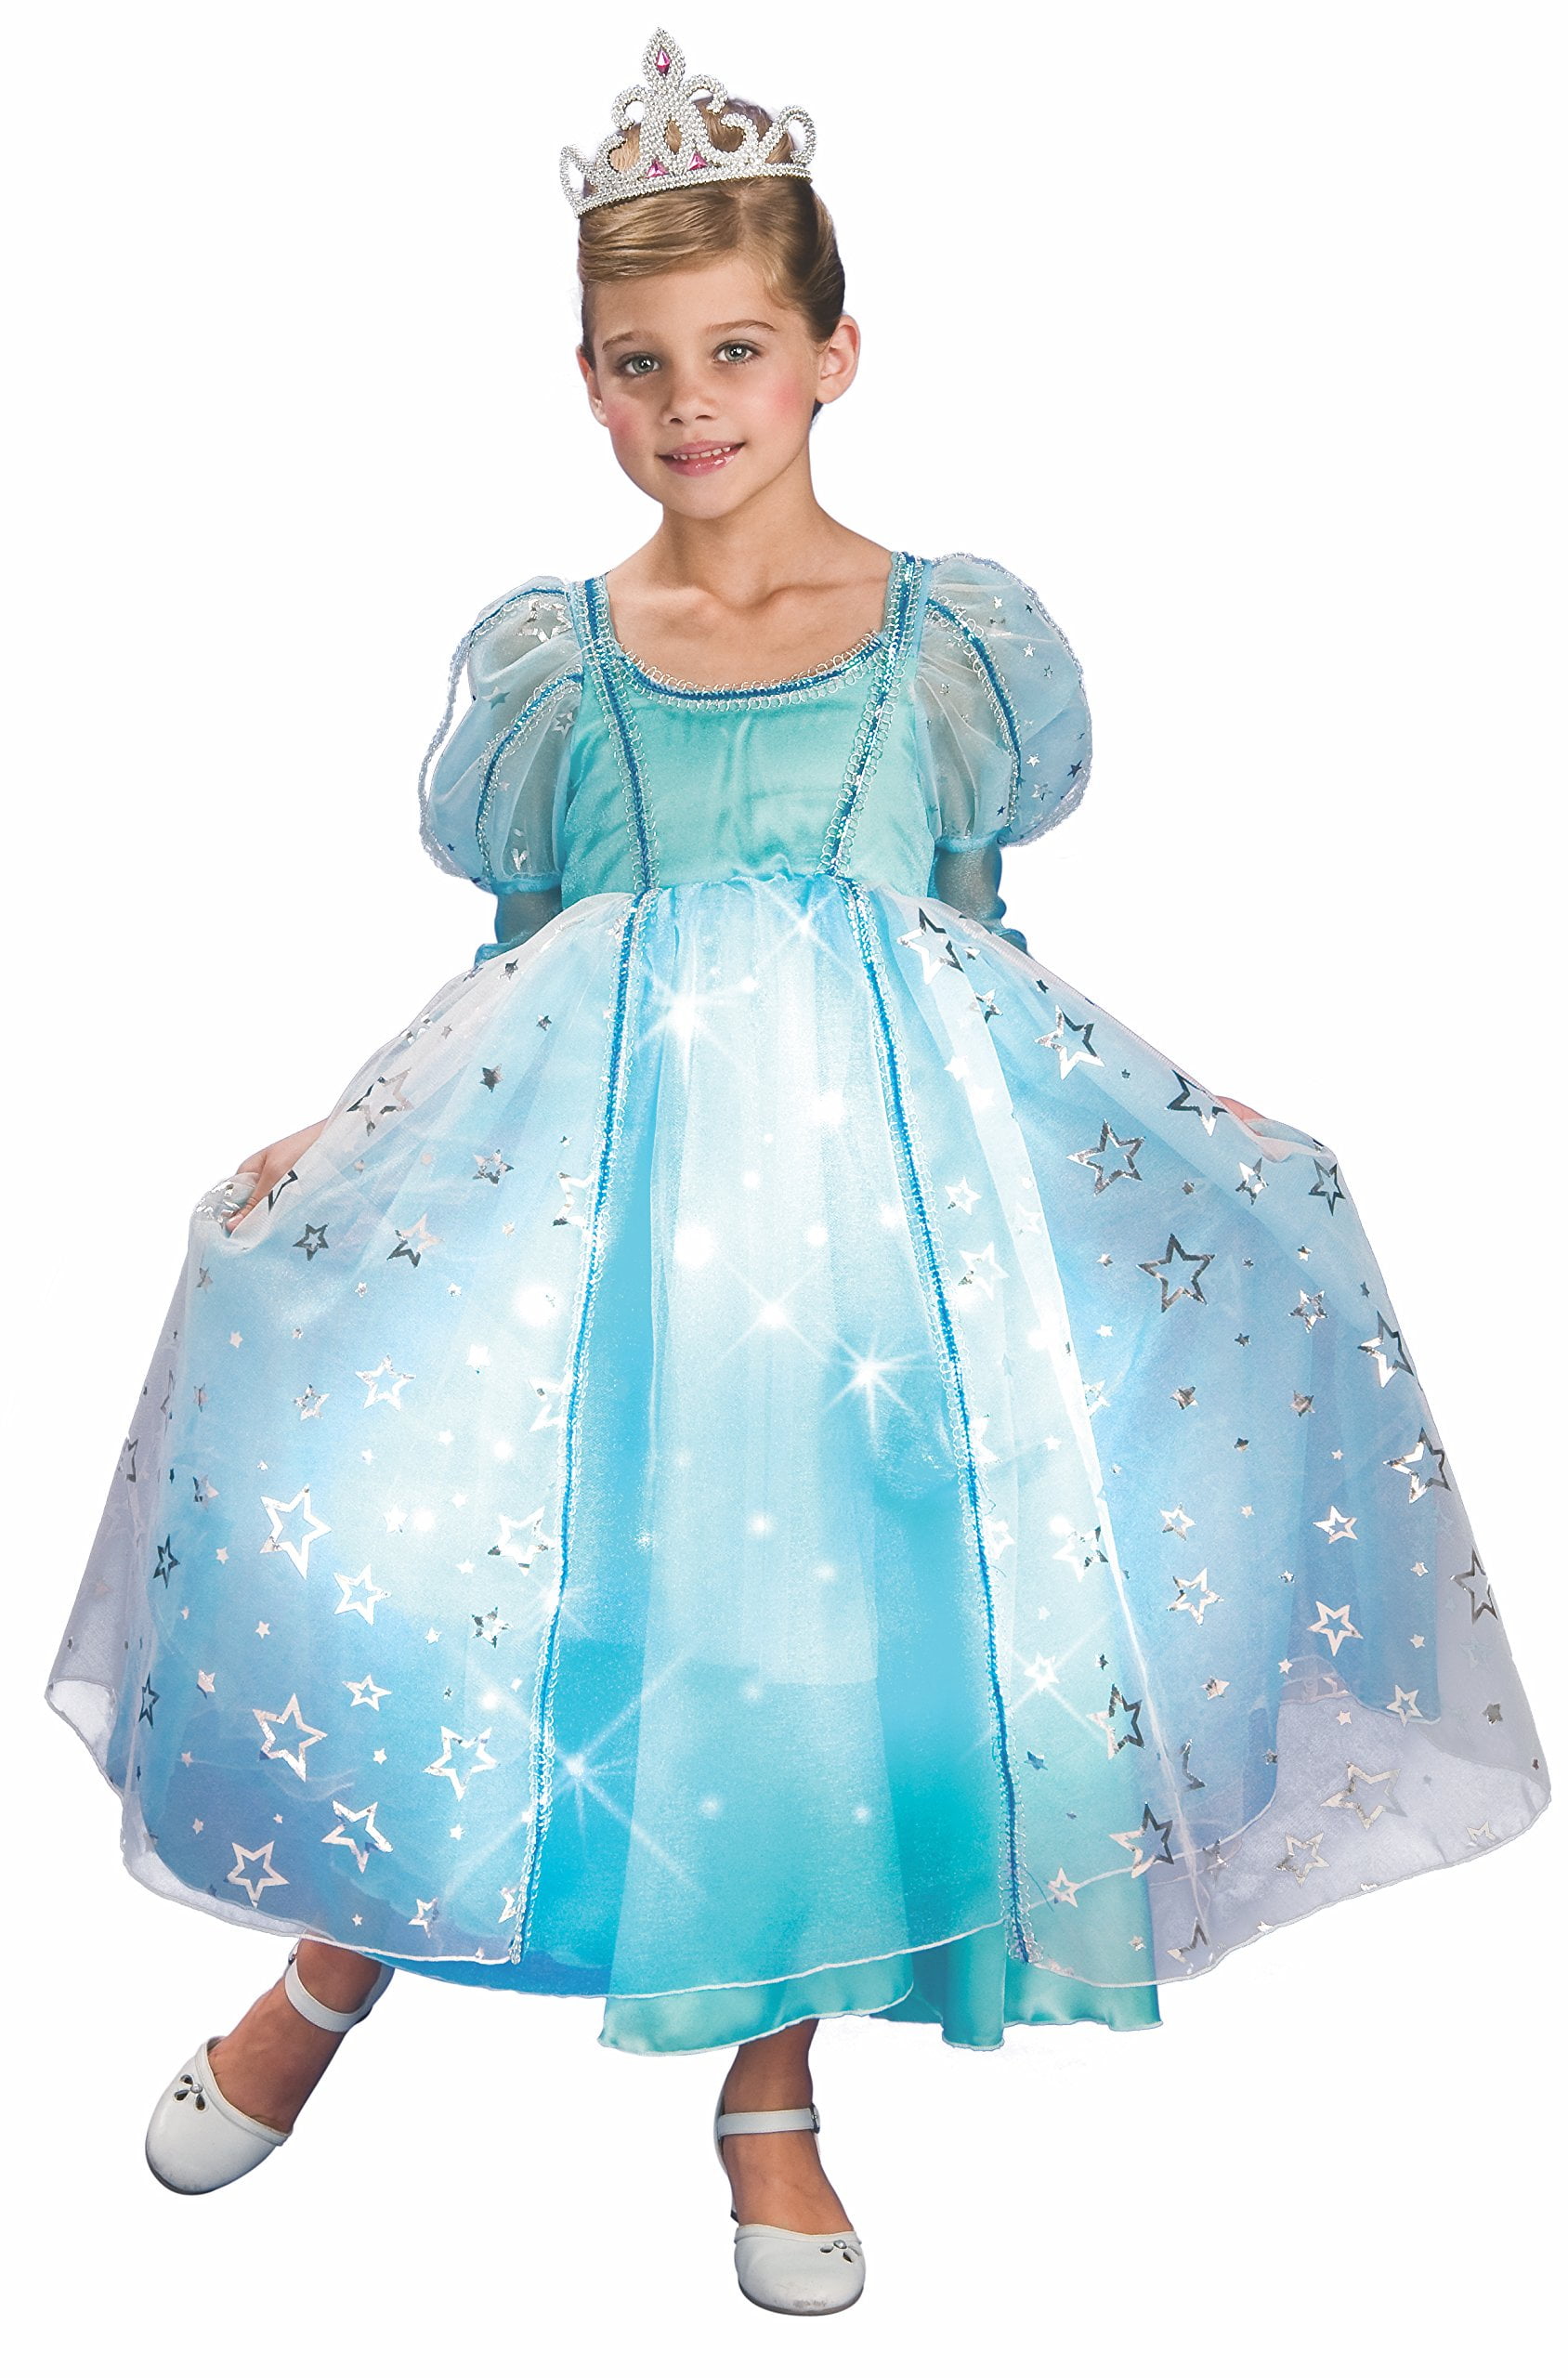 Нарядиться принцессой. Платья для принцессы. Платье принцессы для девочки. Карнавальное платье принцессы для девочки.